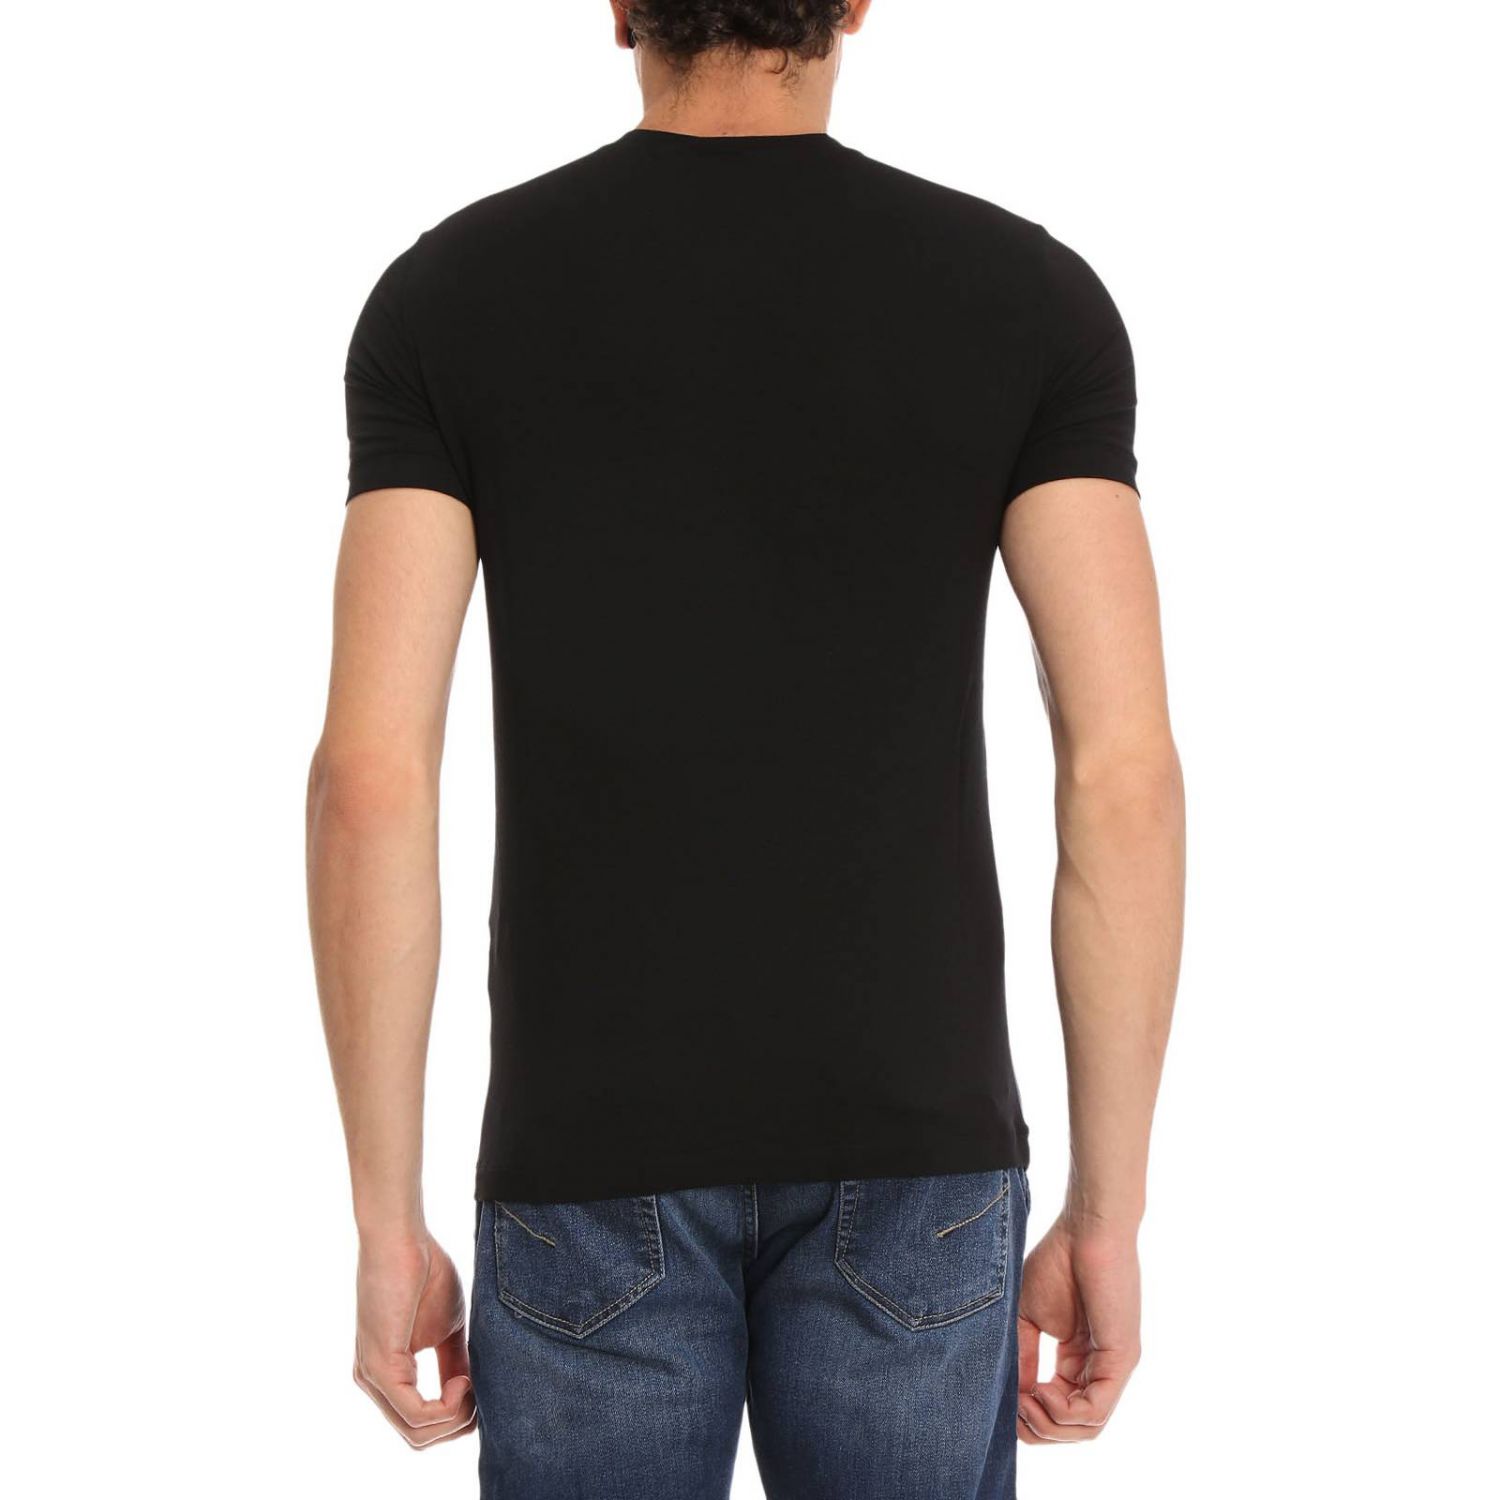 Giorgio Armani Outlet: T-shirt men - Black | T-Shirt Giorgio Armani ...